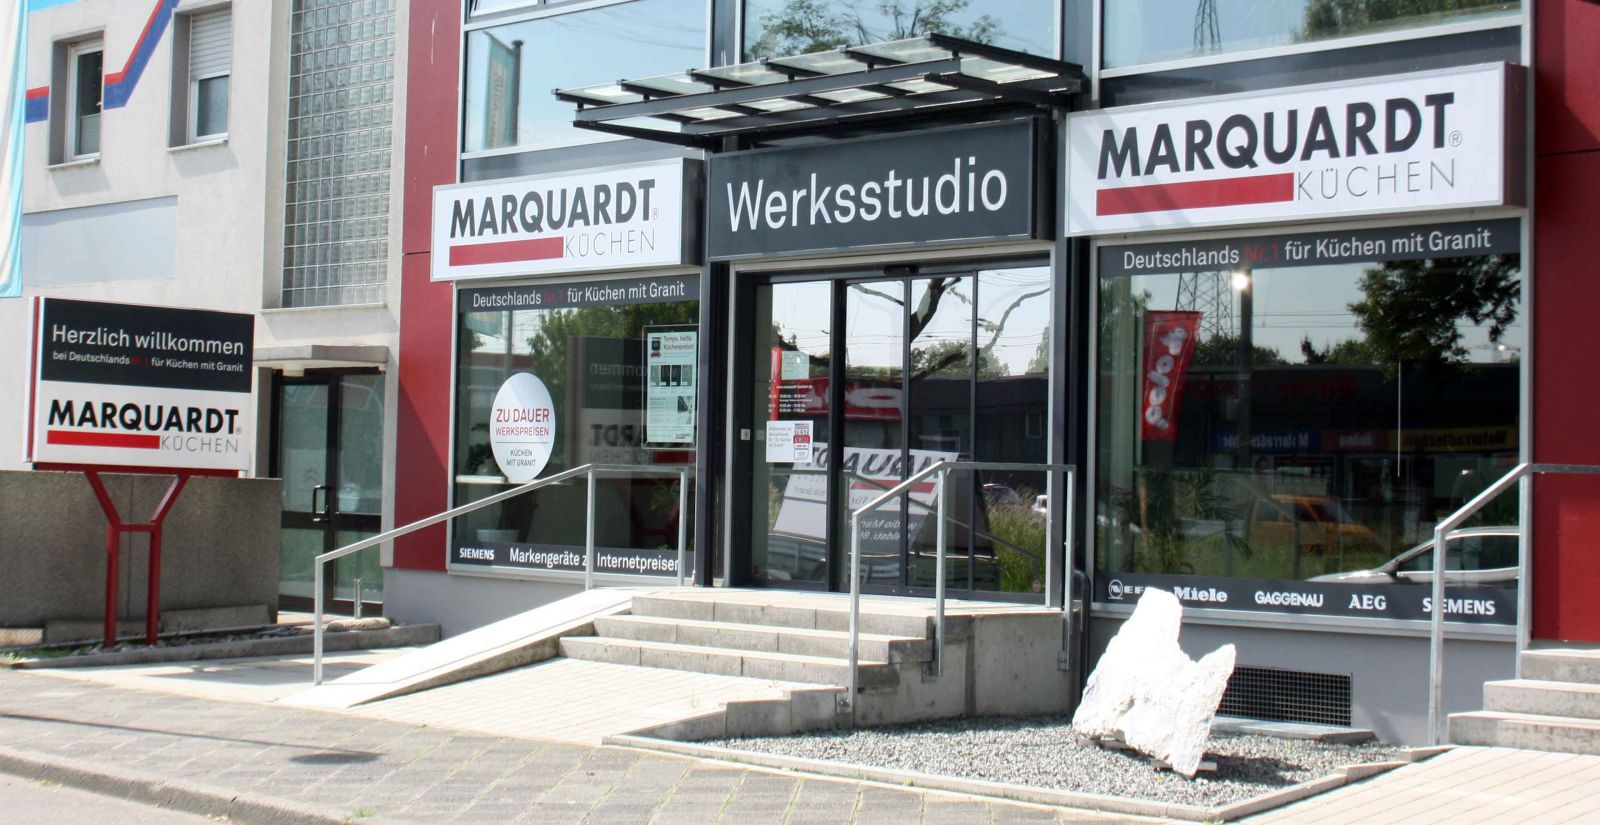 Kuchenstudio Mannheim Marquardt Kuchen